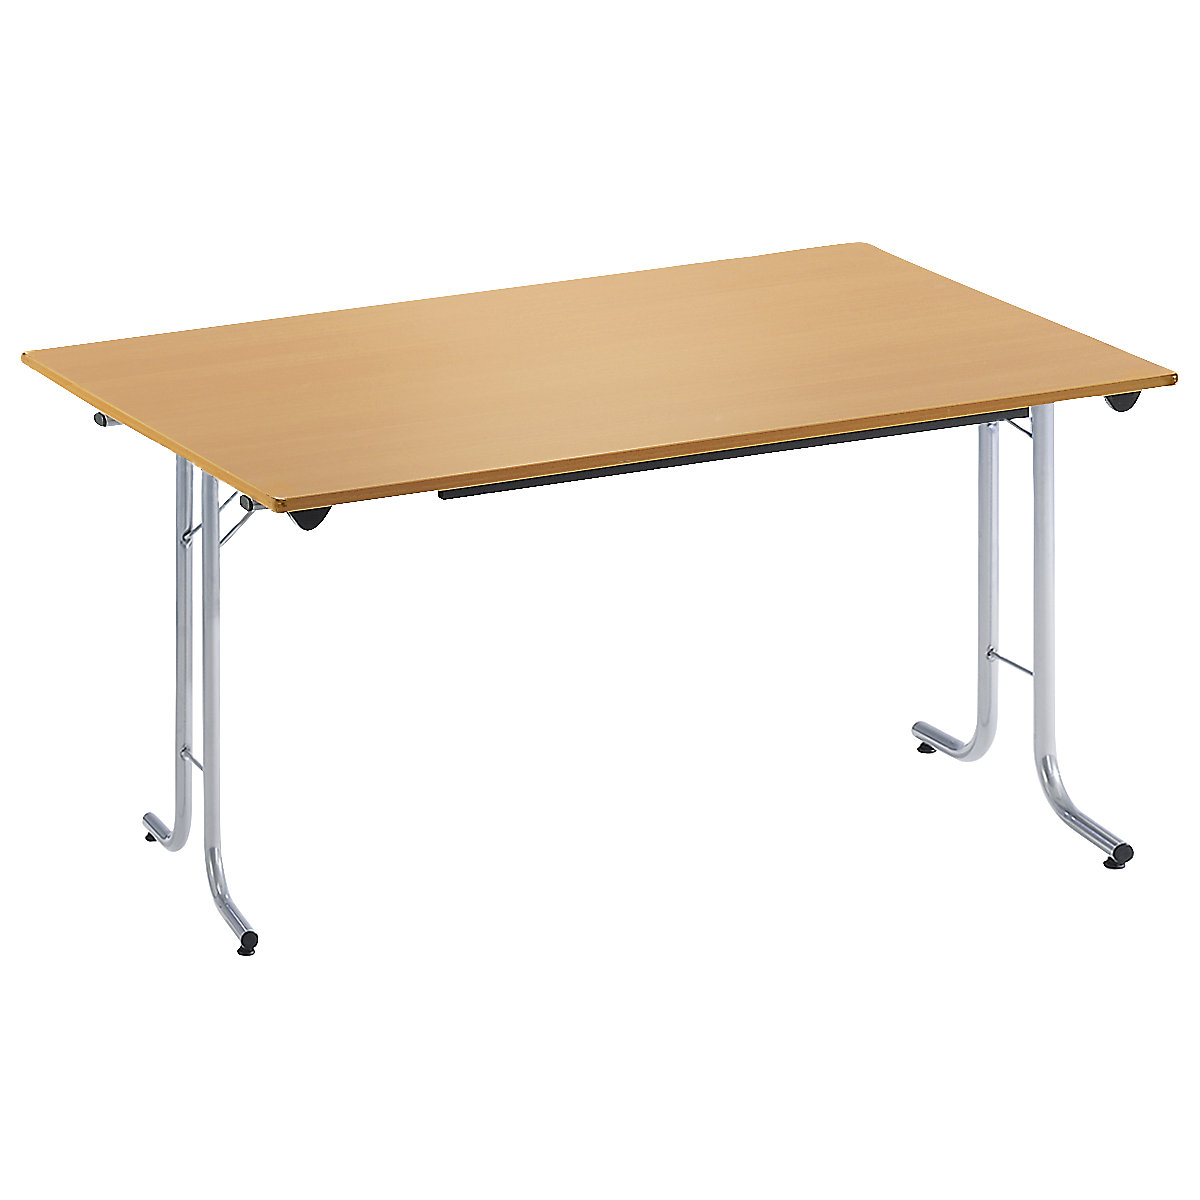 Folding table, with rounded edges, round tubular frame, rectangular top, 1200 x 700 mm, aluminium coloured frame, beech finish tabletop-13